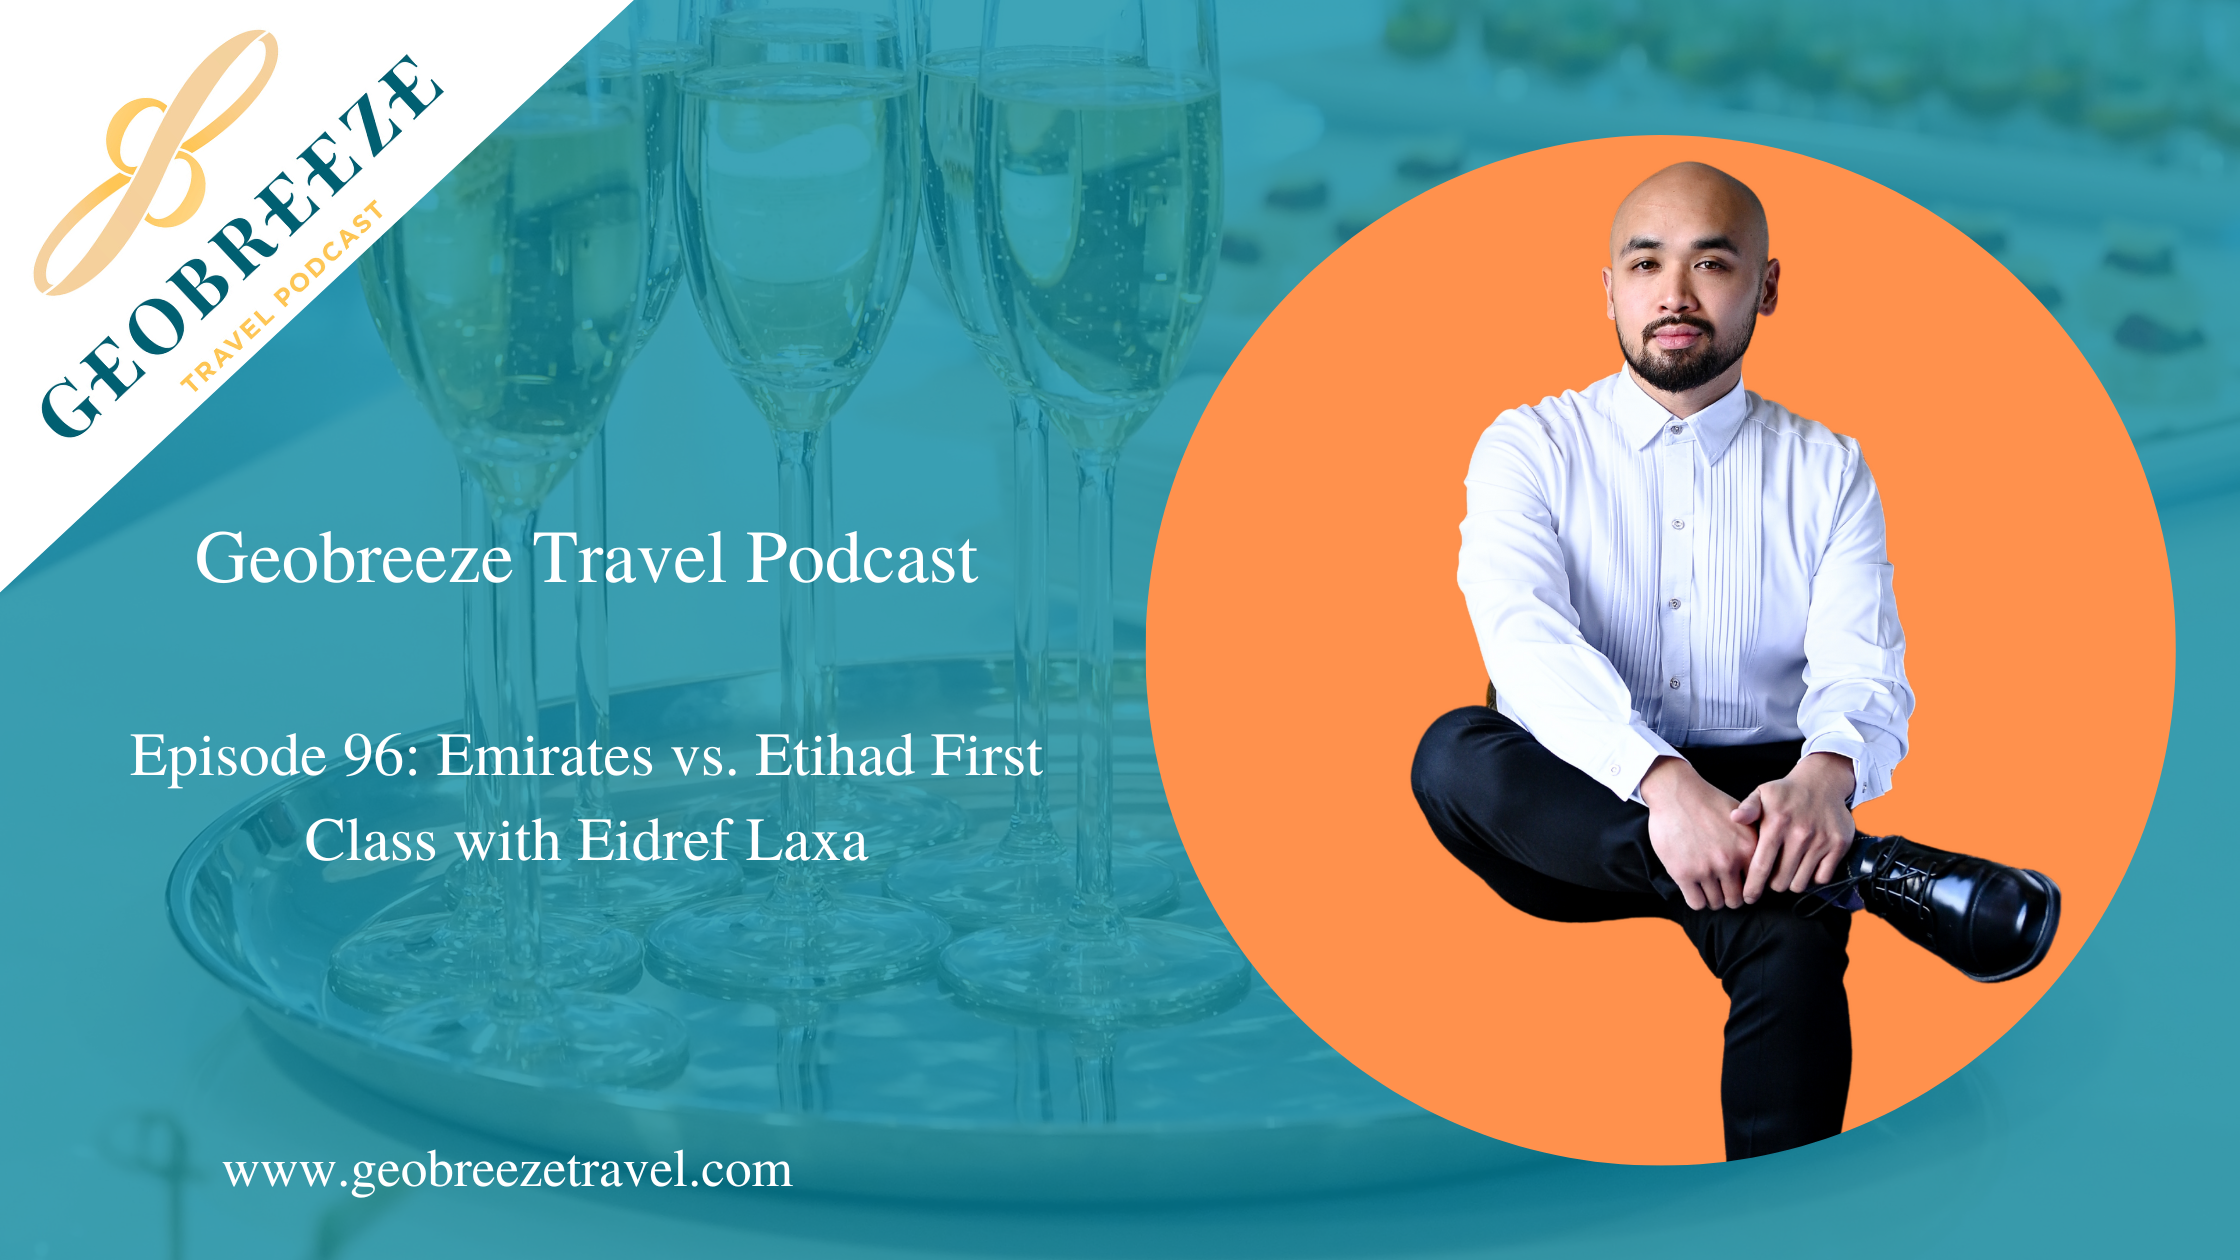 Episode 96: Emirates vs. Etihad First Class with Eidref Laxa